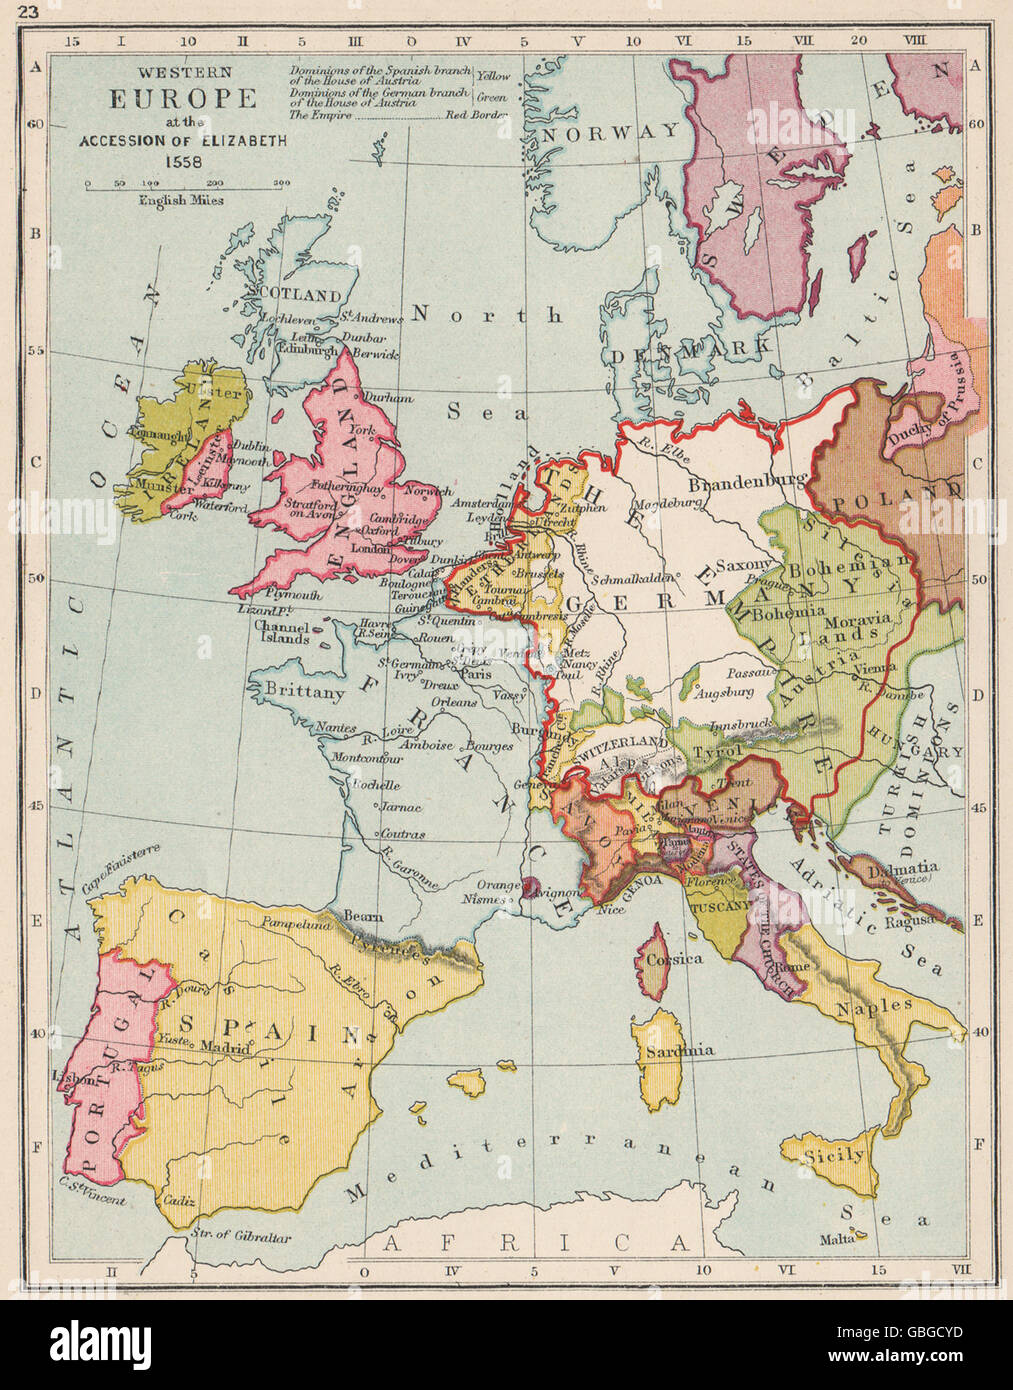 HOLY ROMAN EMPIRE 1558: Western Europe. Accession of Elizabeth I, 1907 old map Stock Photo